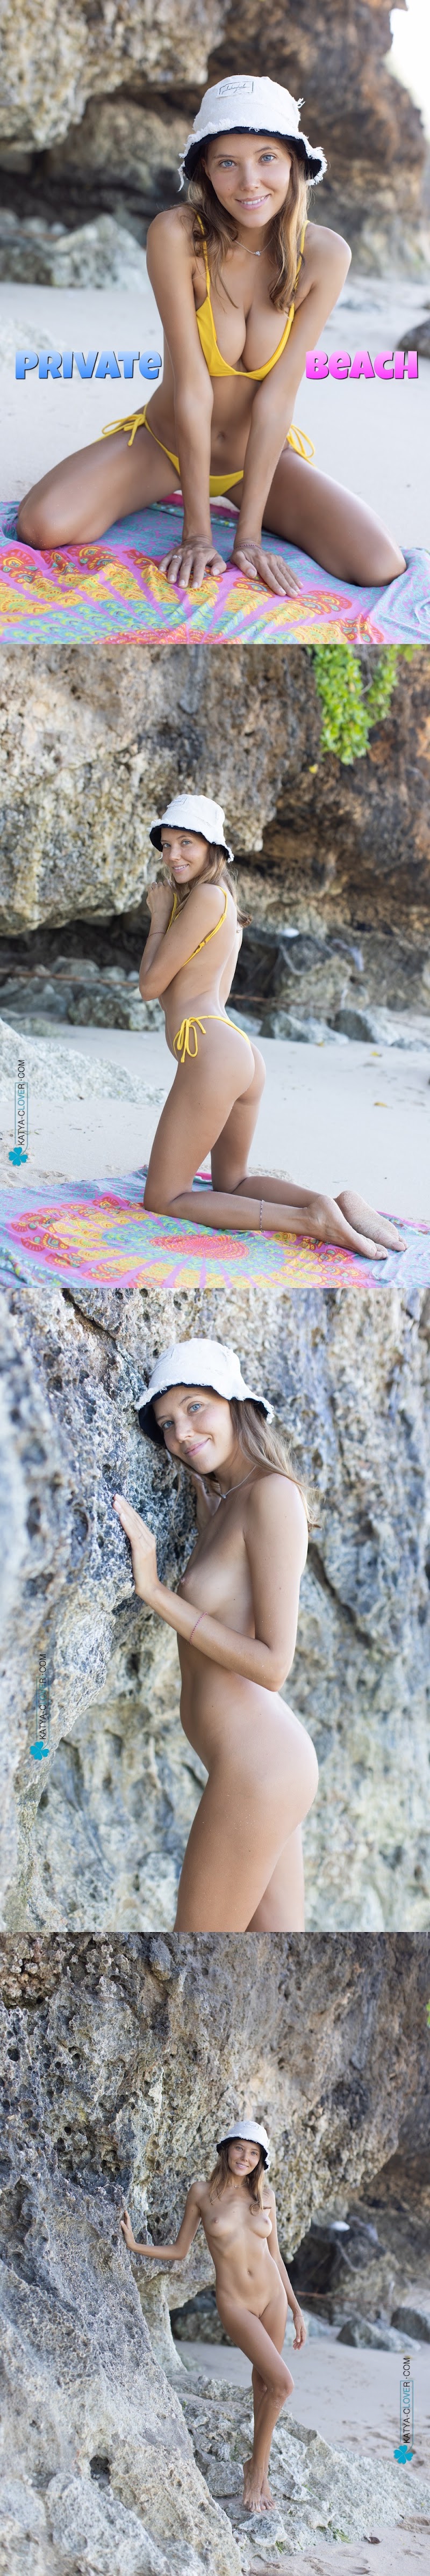 katya_clover_private_beach.zip-jk- [KatyaClover.Com] Katya Clover - Private Beach